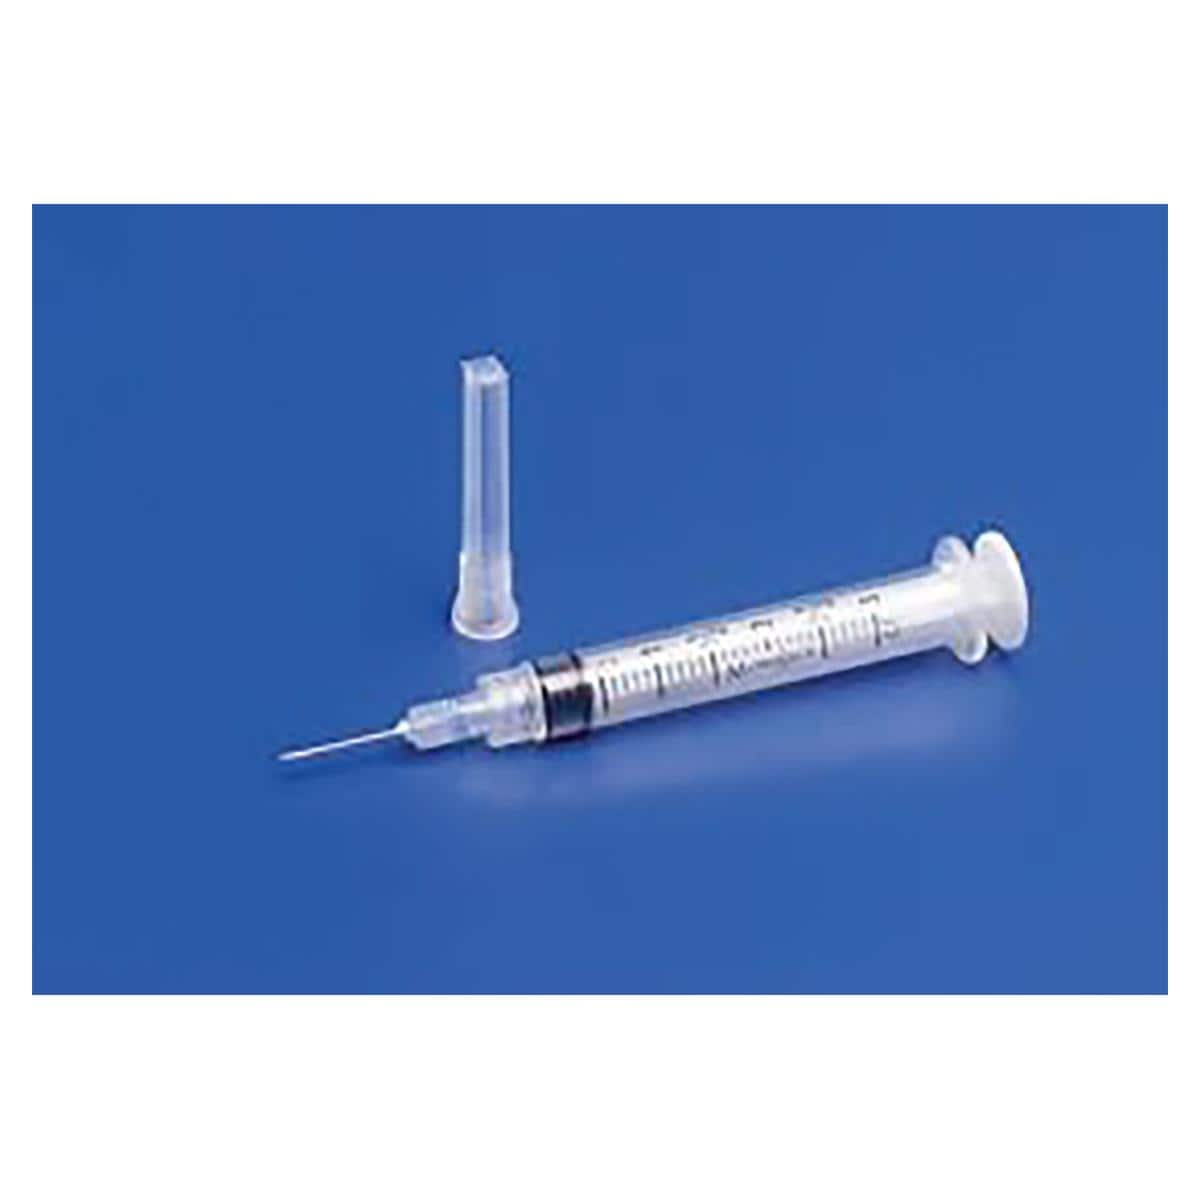 Syringe Needle Comb 1ml With 29G 200pk